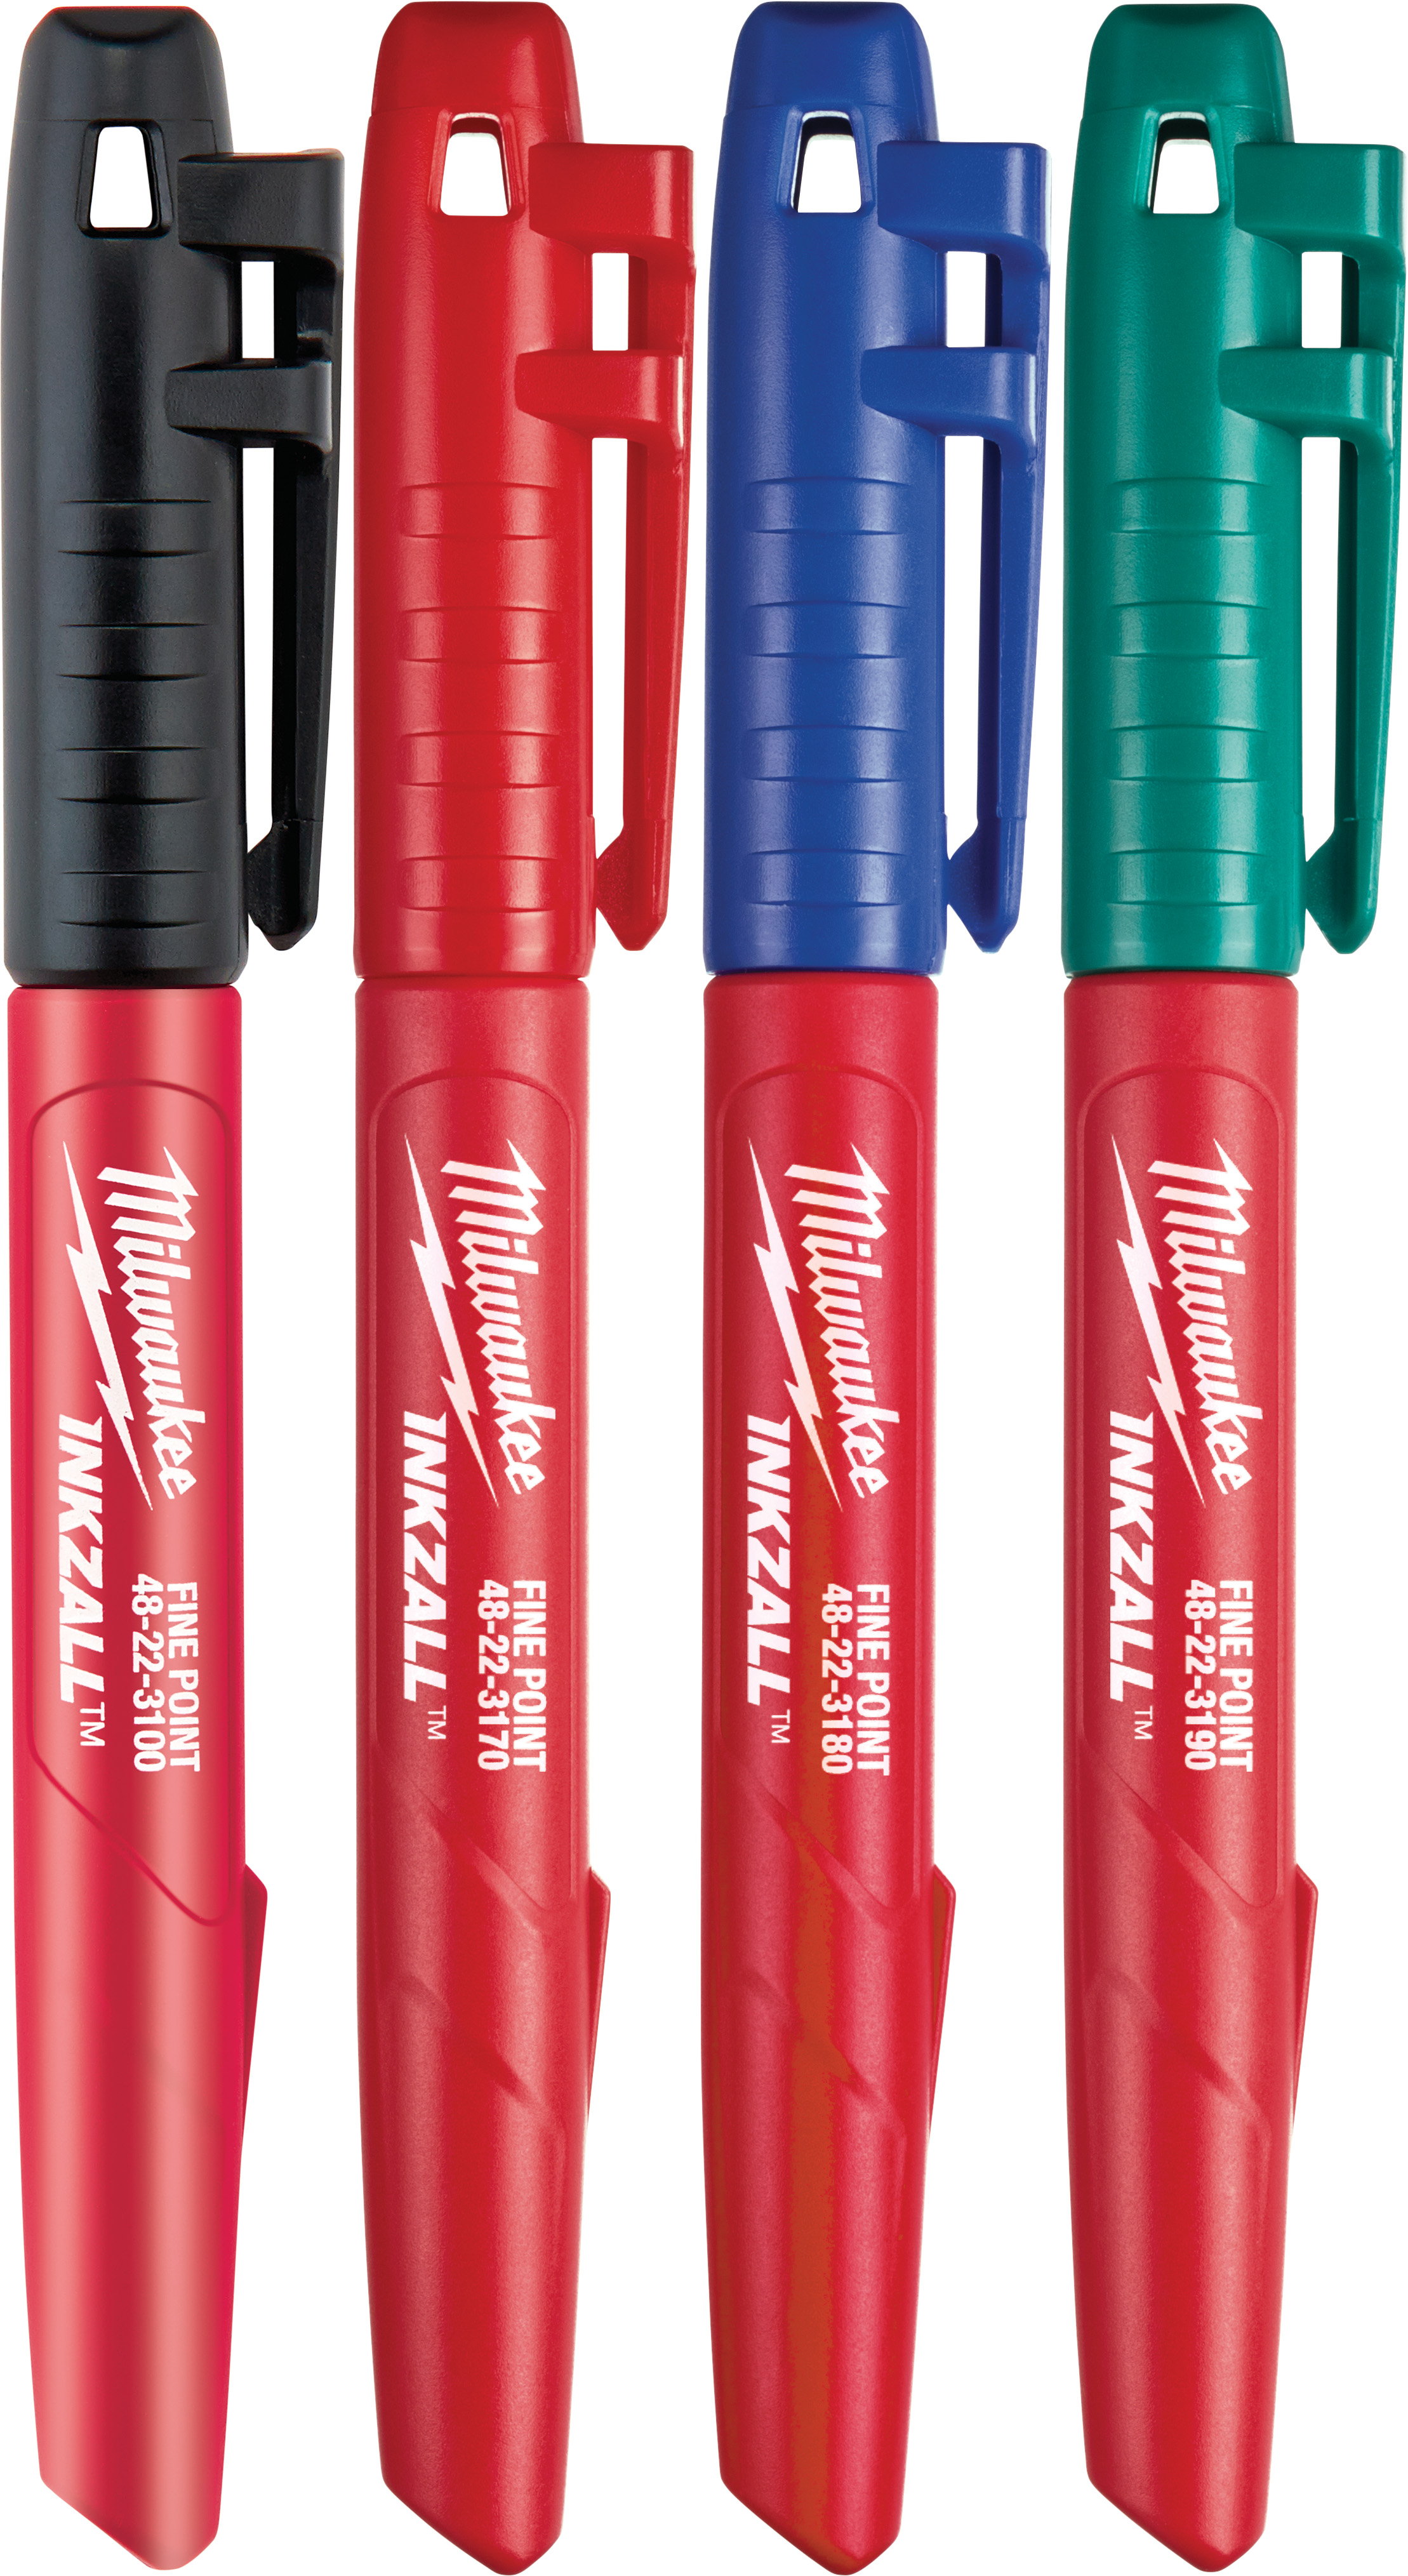 Milwaukee 48-22-3162 12 Pack INKZALL Blue Ultra Fine Point Pens